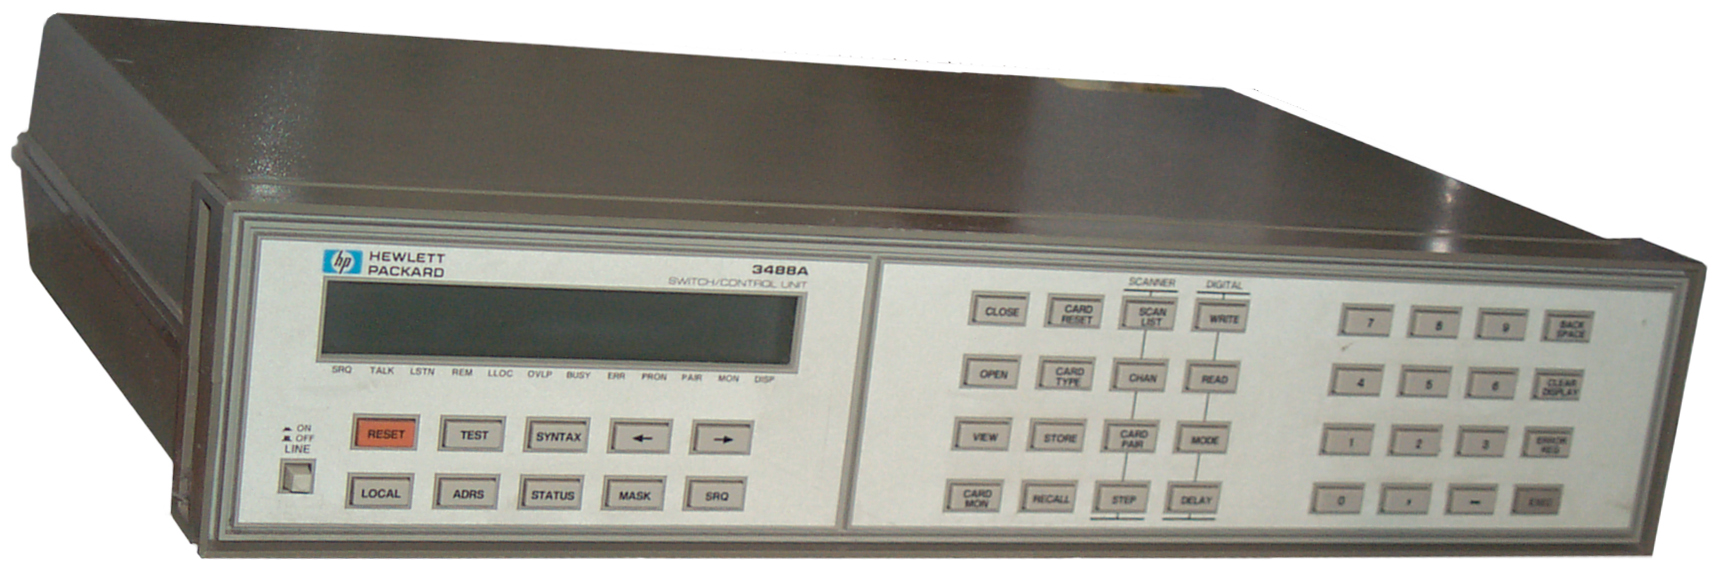 HP 59000 Series HP-IB Instruments